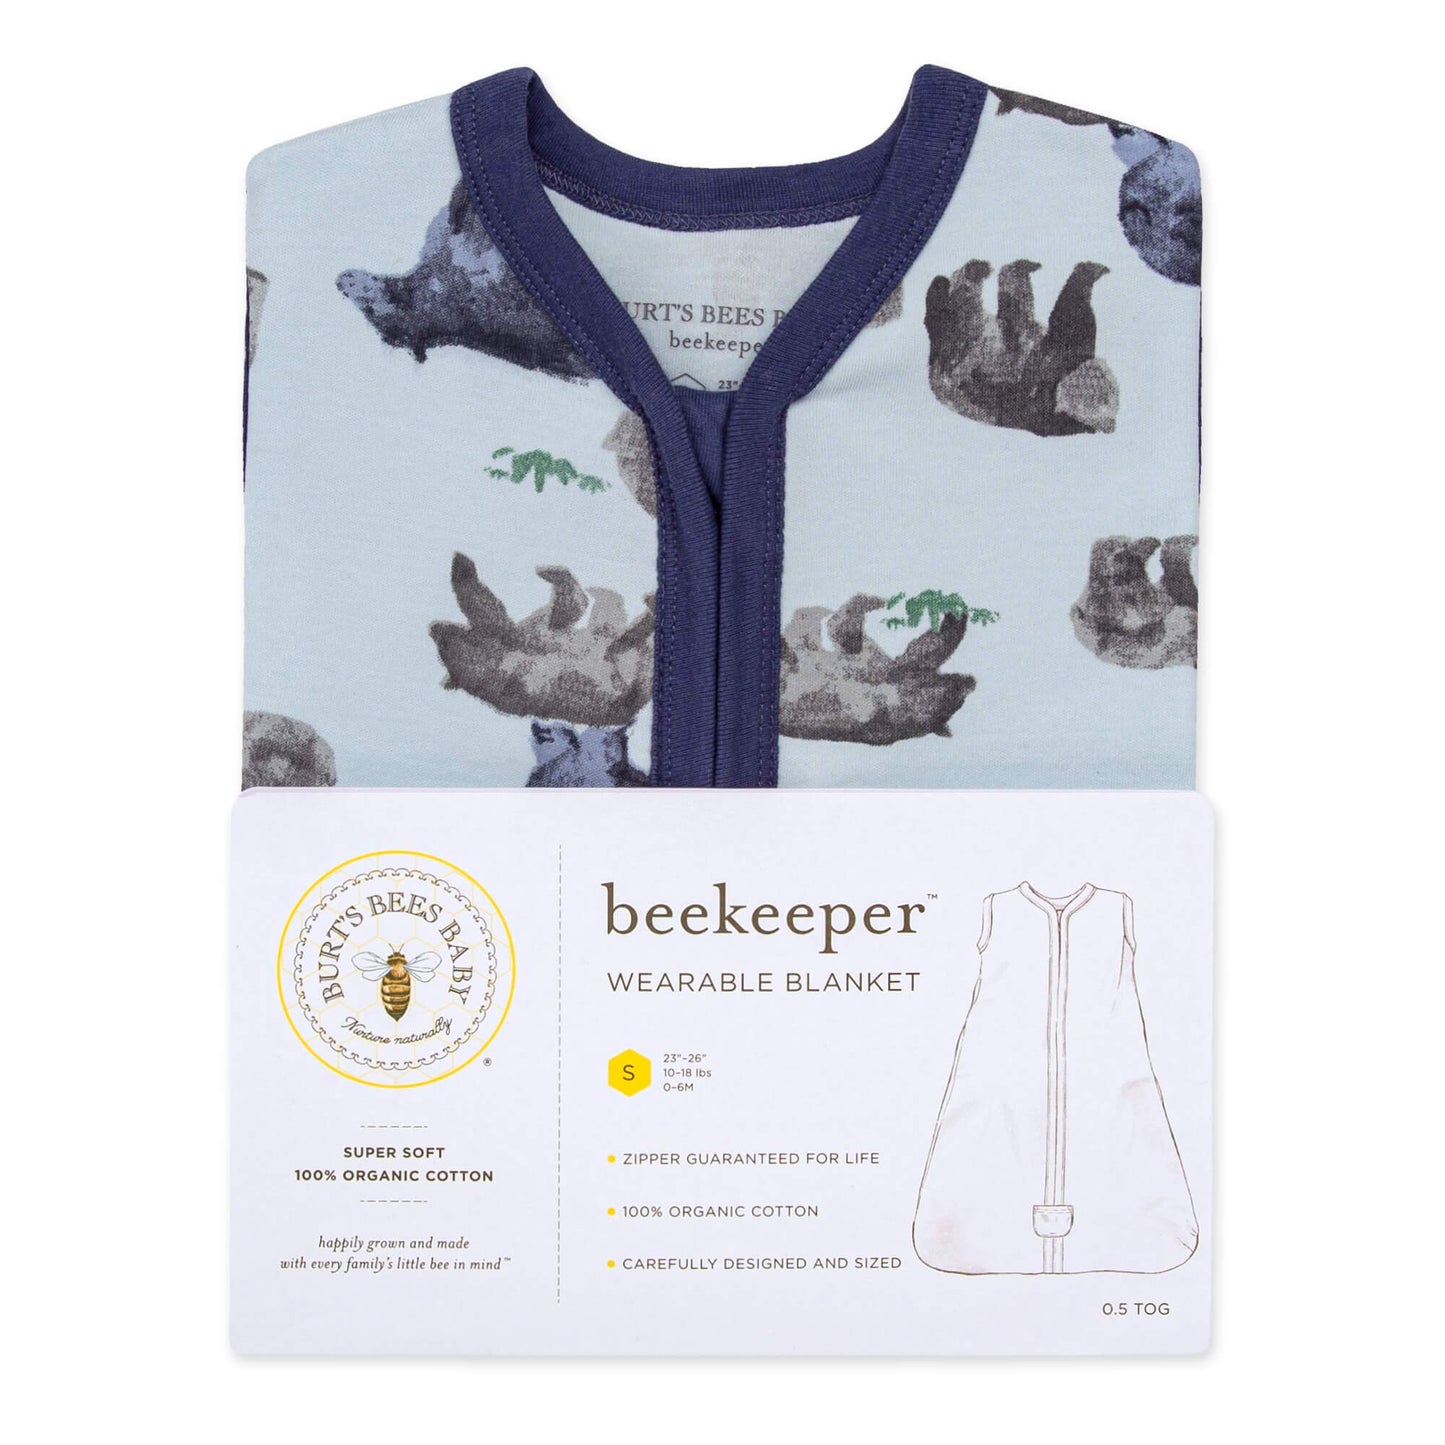 Burt's Bees Baby unisex baby Blanket, 100% Organic Cotton Beekeeper, Swaddle Transition Sleep Bag Wearable Blanket, Friendly Bears, Large US